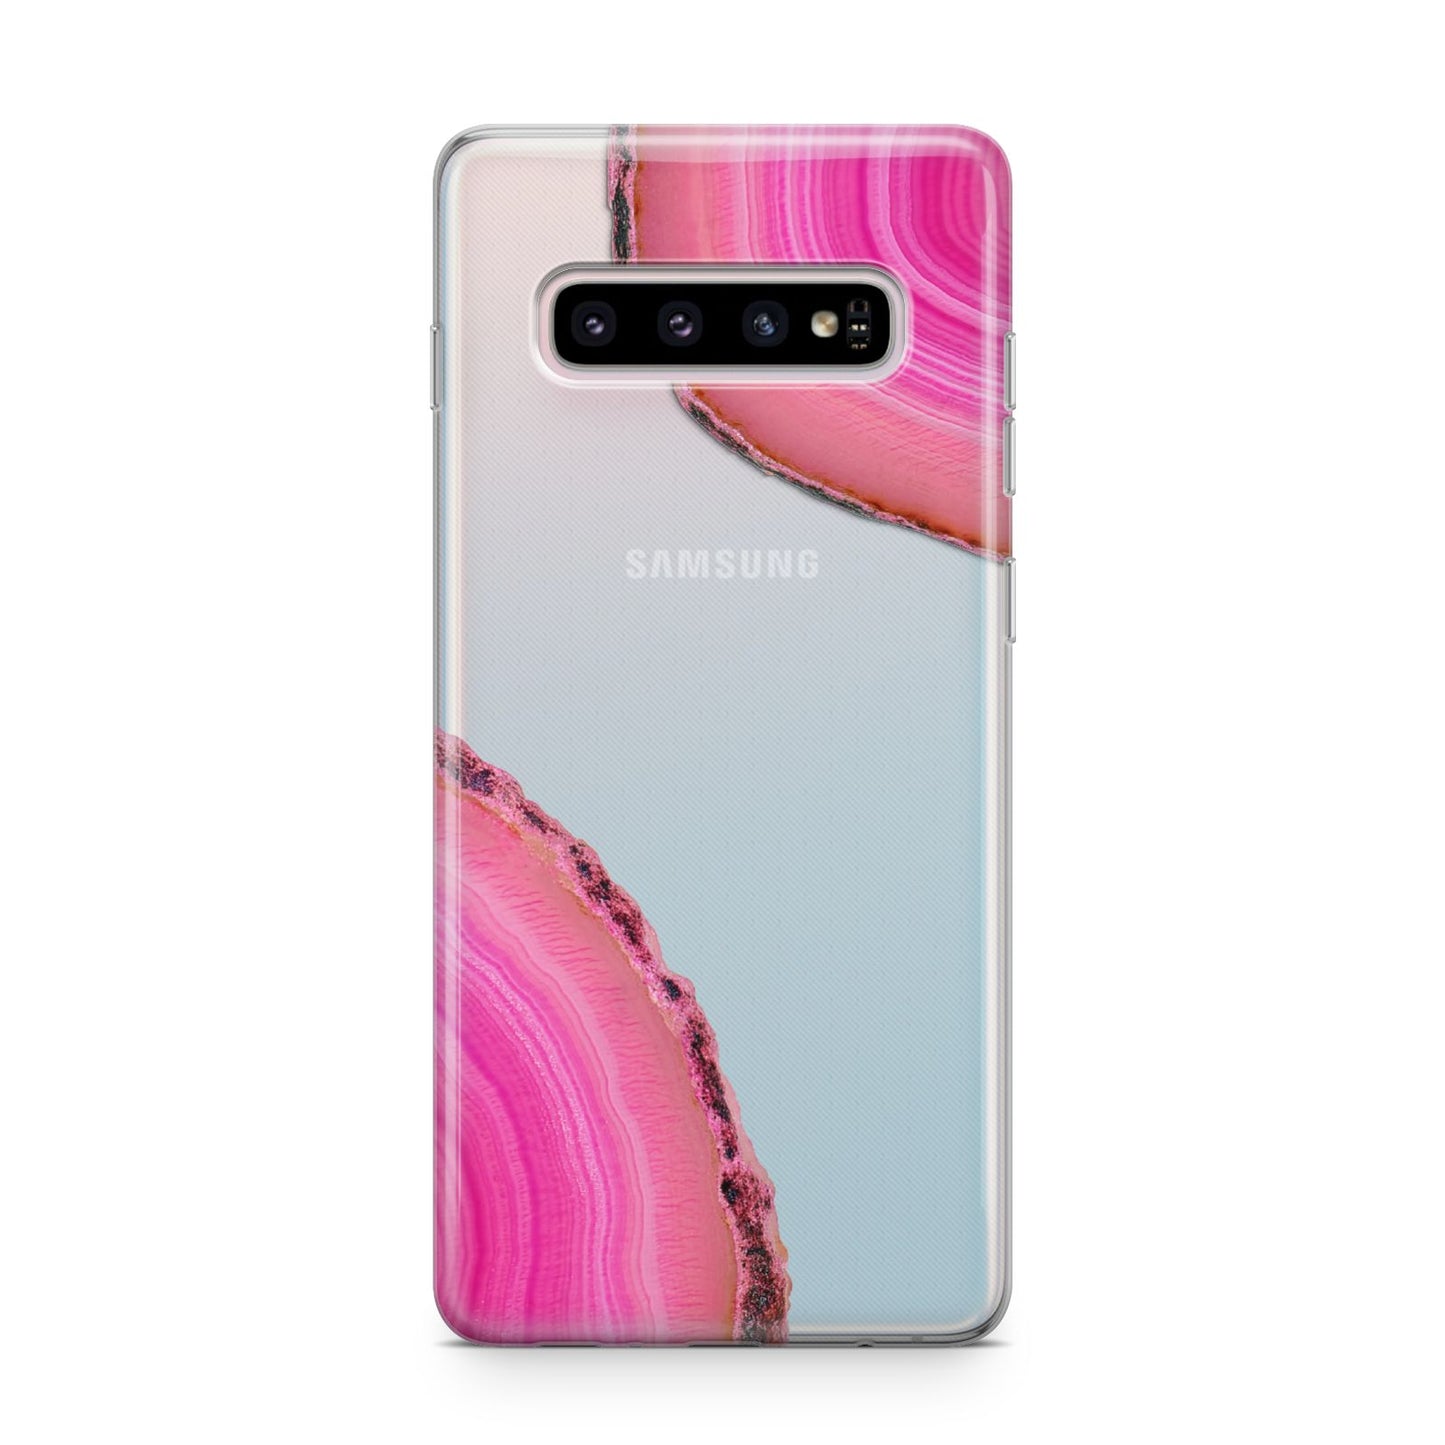 Agate Bright Pink Samsung Galaxy S10 Plus Case